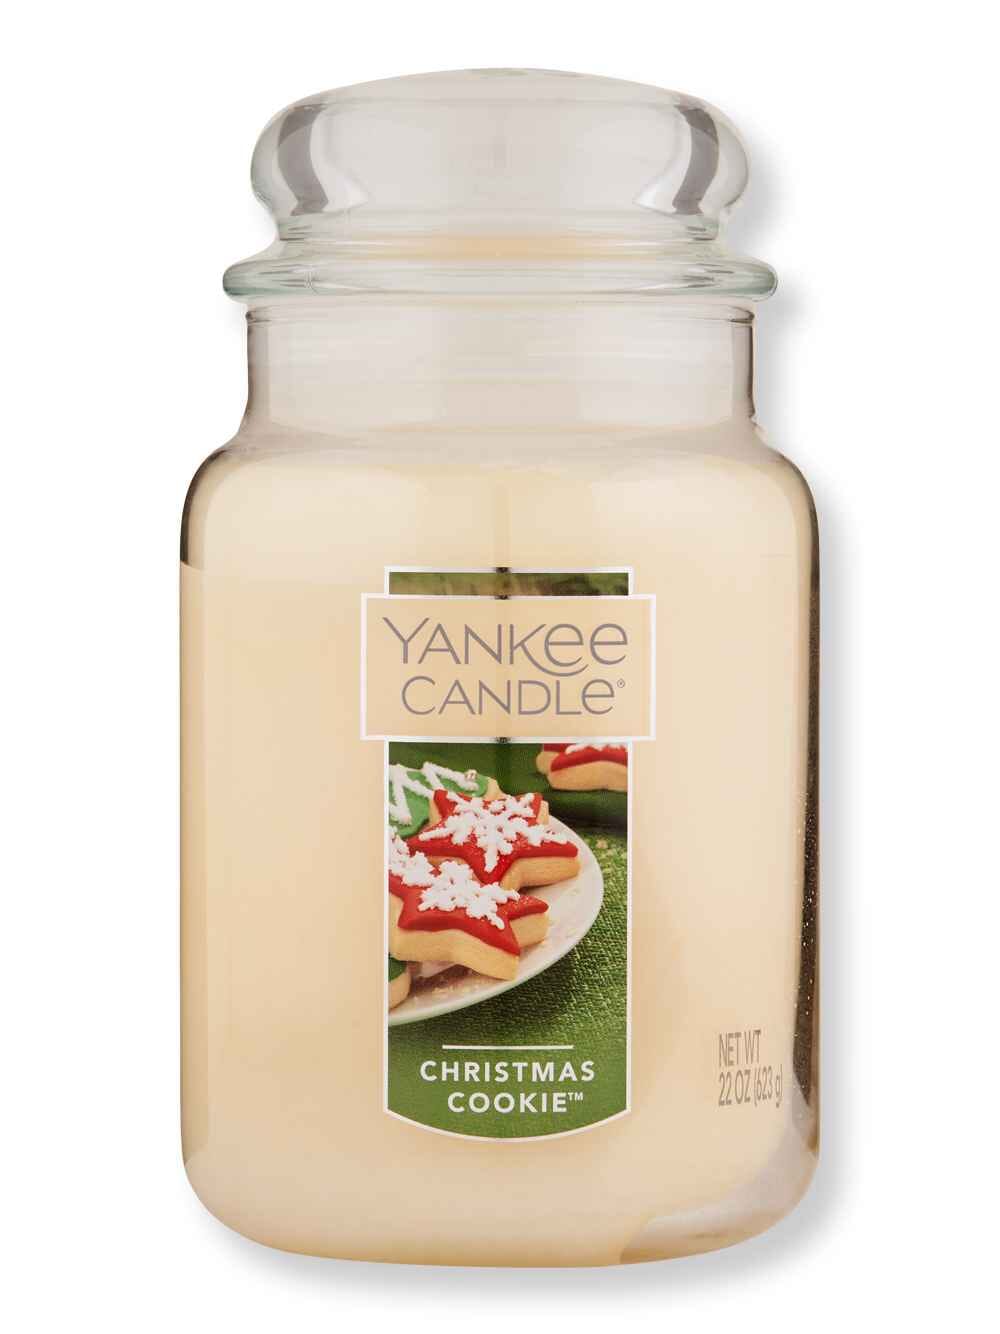 Yankee Candle Christmas Cookie Original Large Jar Candle 22 oz